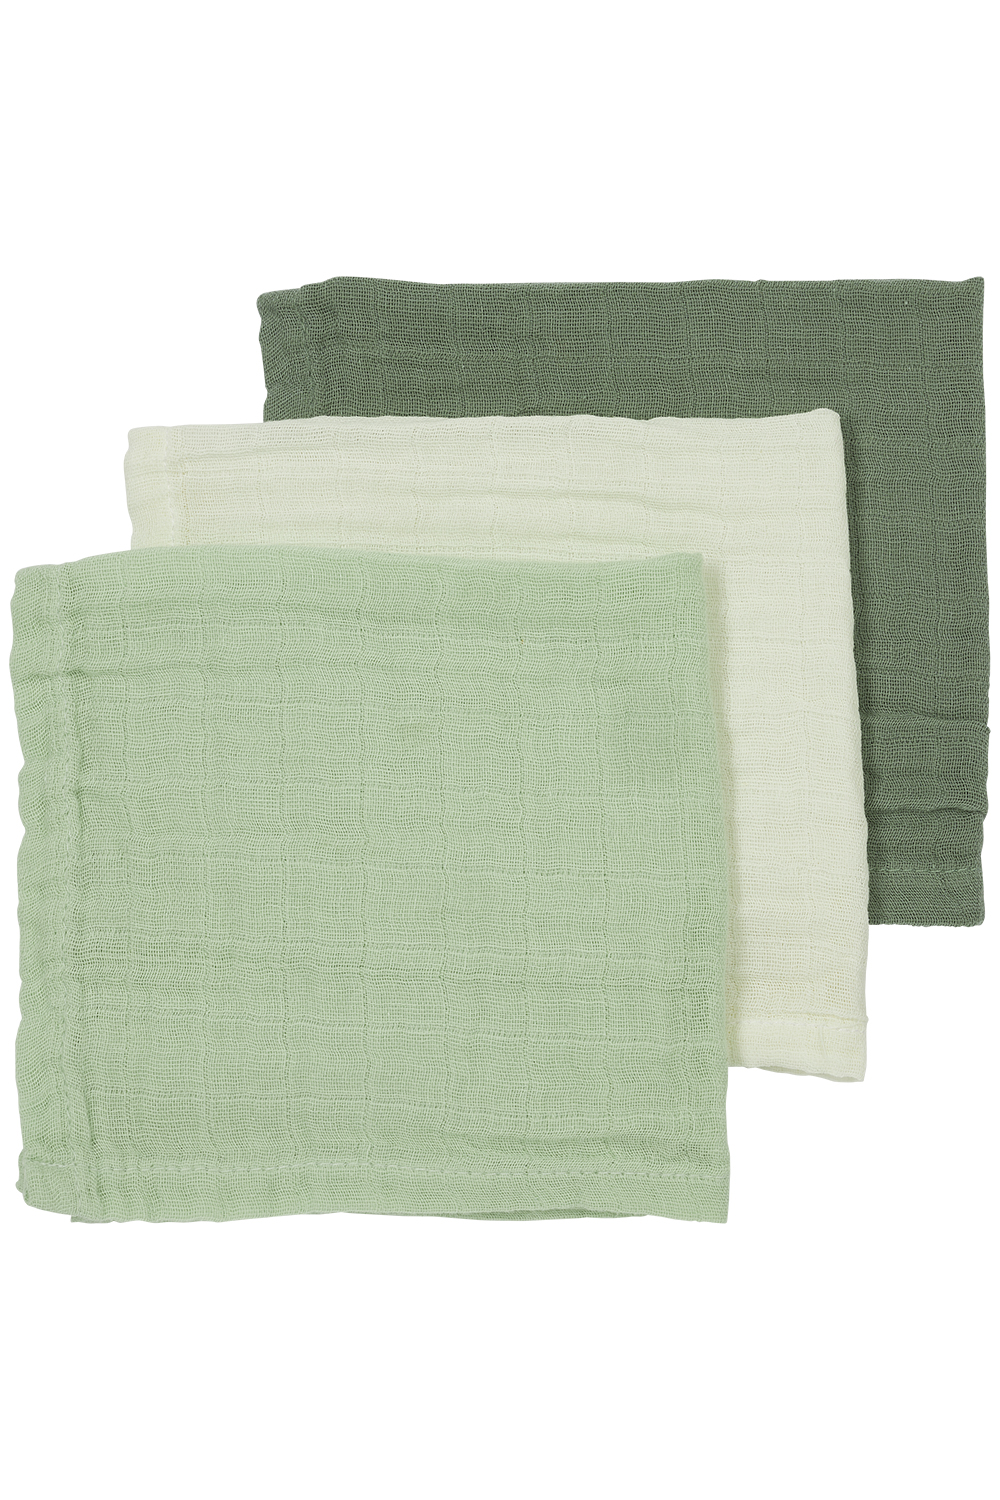 Monddoekjes 3-pack hydrofiel Uni - offwhite/soft green/forest green - 30x30cm